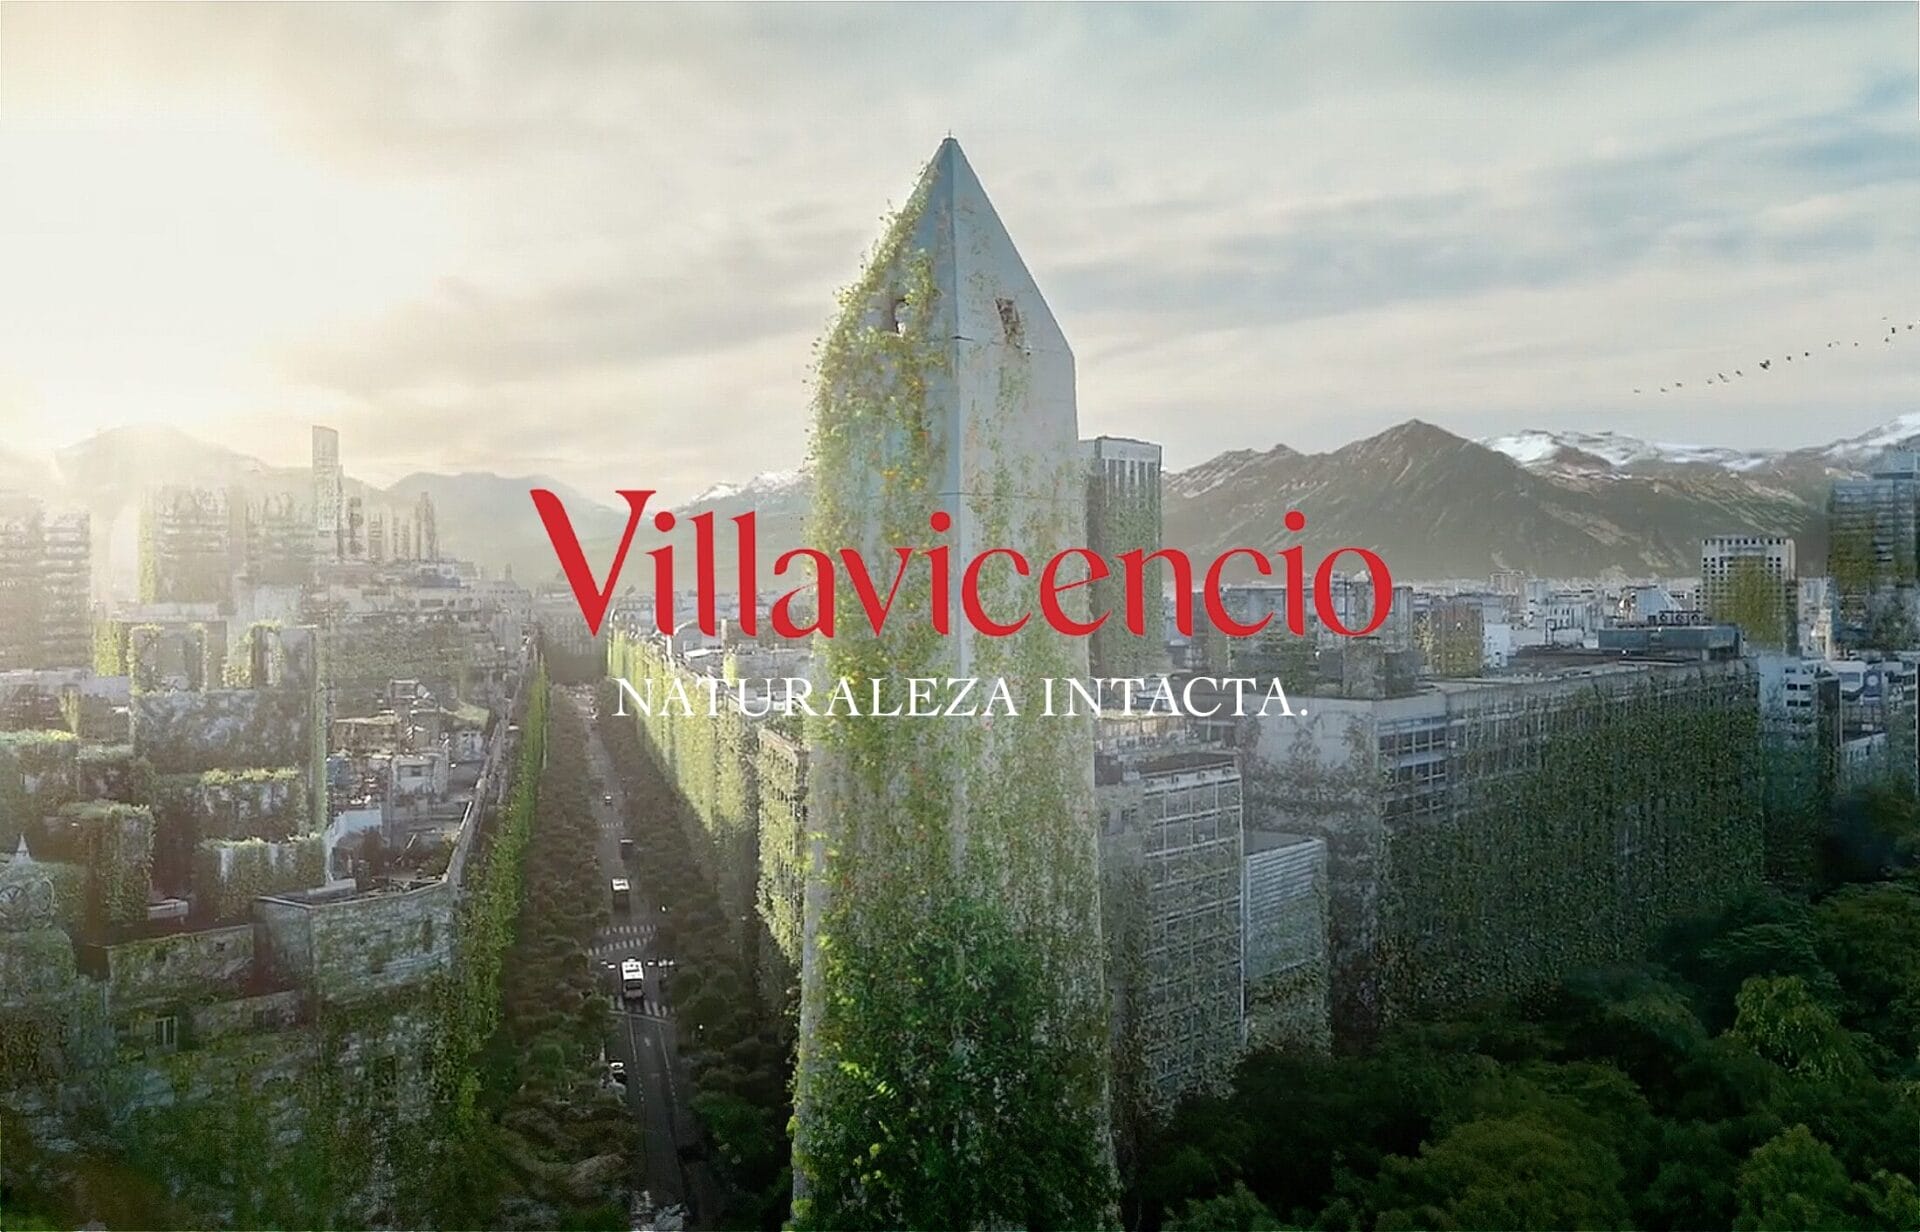 Villavicencio · Naturaleza intacta